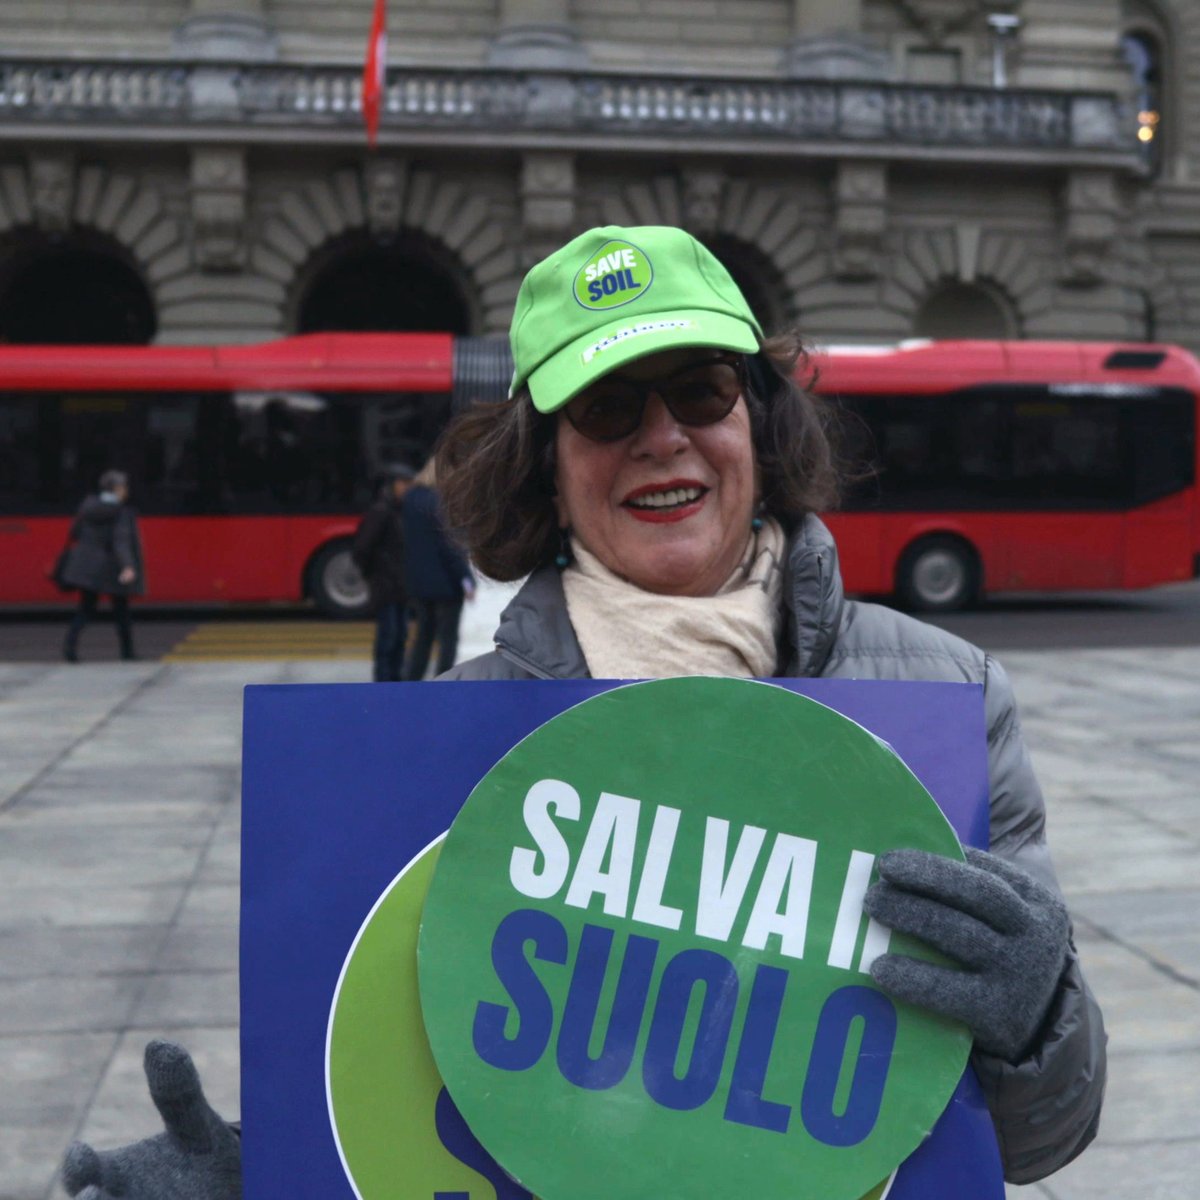 #SaveSoil in #Bern in multiple languages🌏
#СпасёмПочву
#SalvemoselSuelo
#TopragiKurtar 
#SalvailSuolo